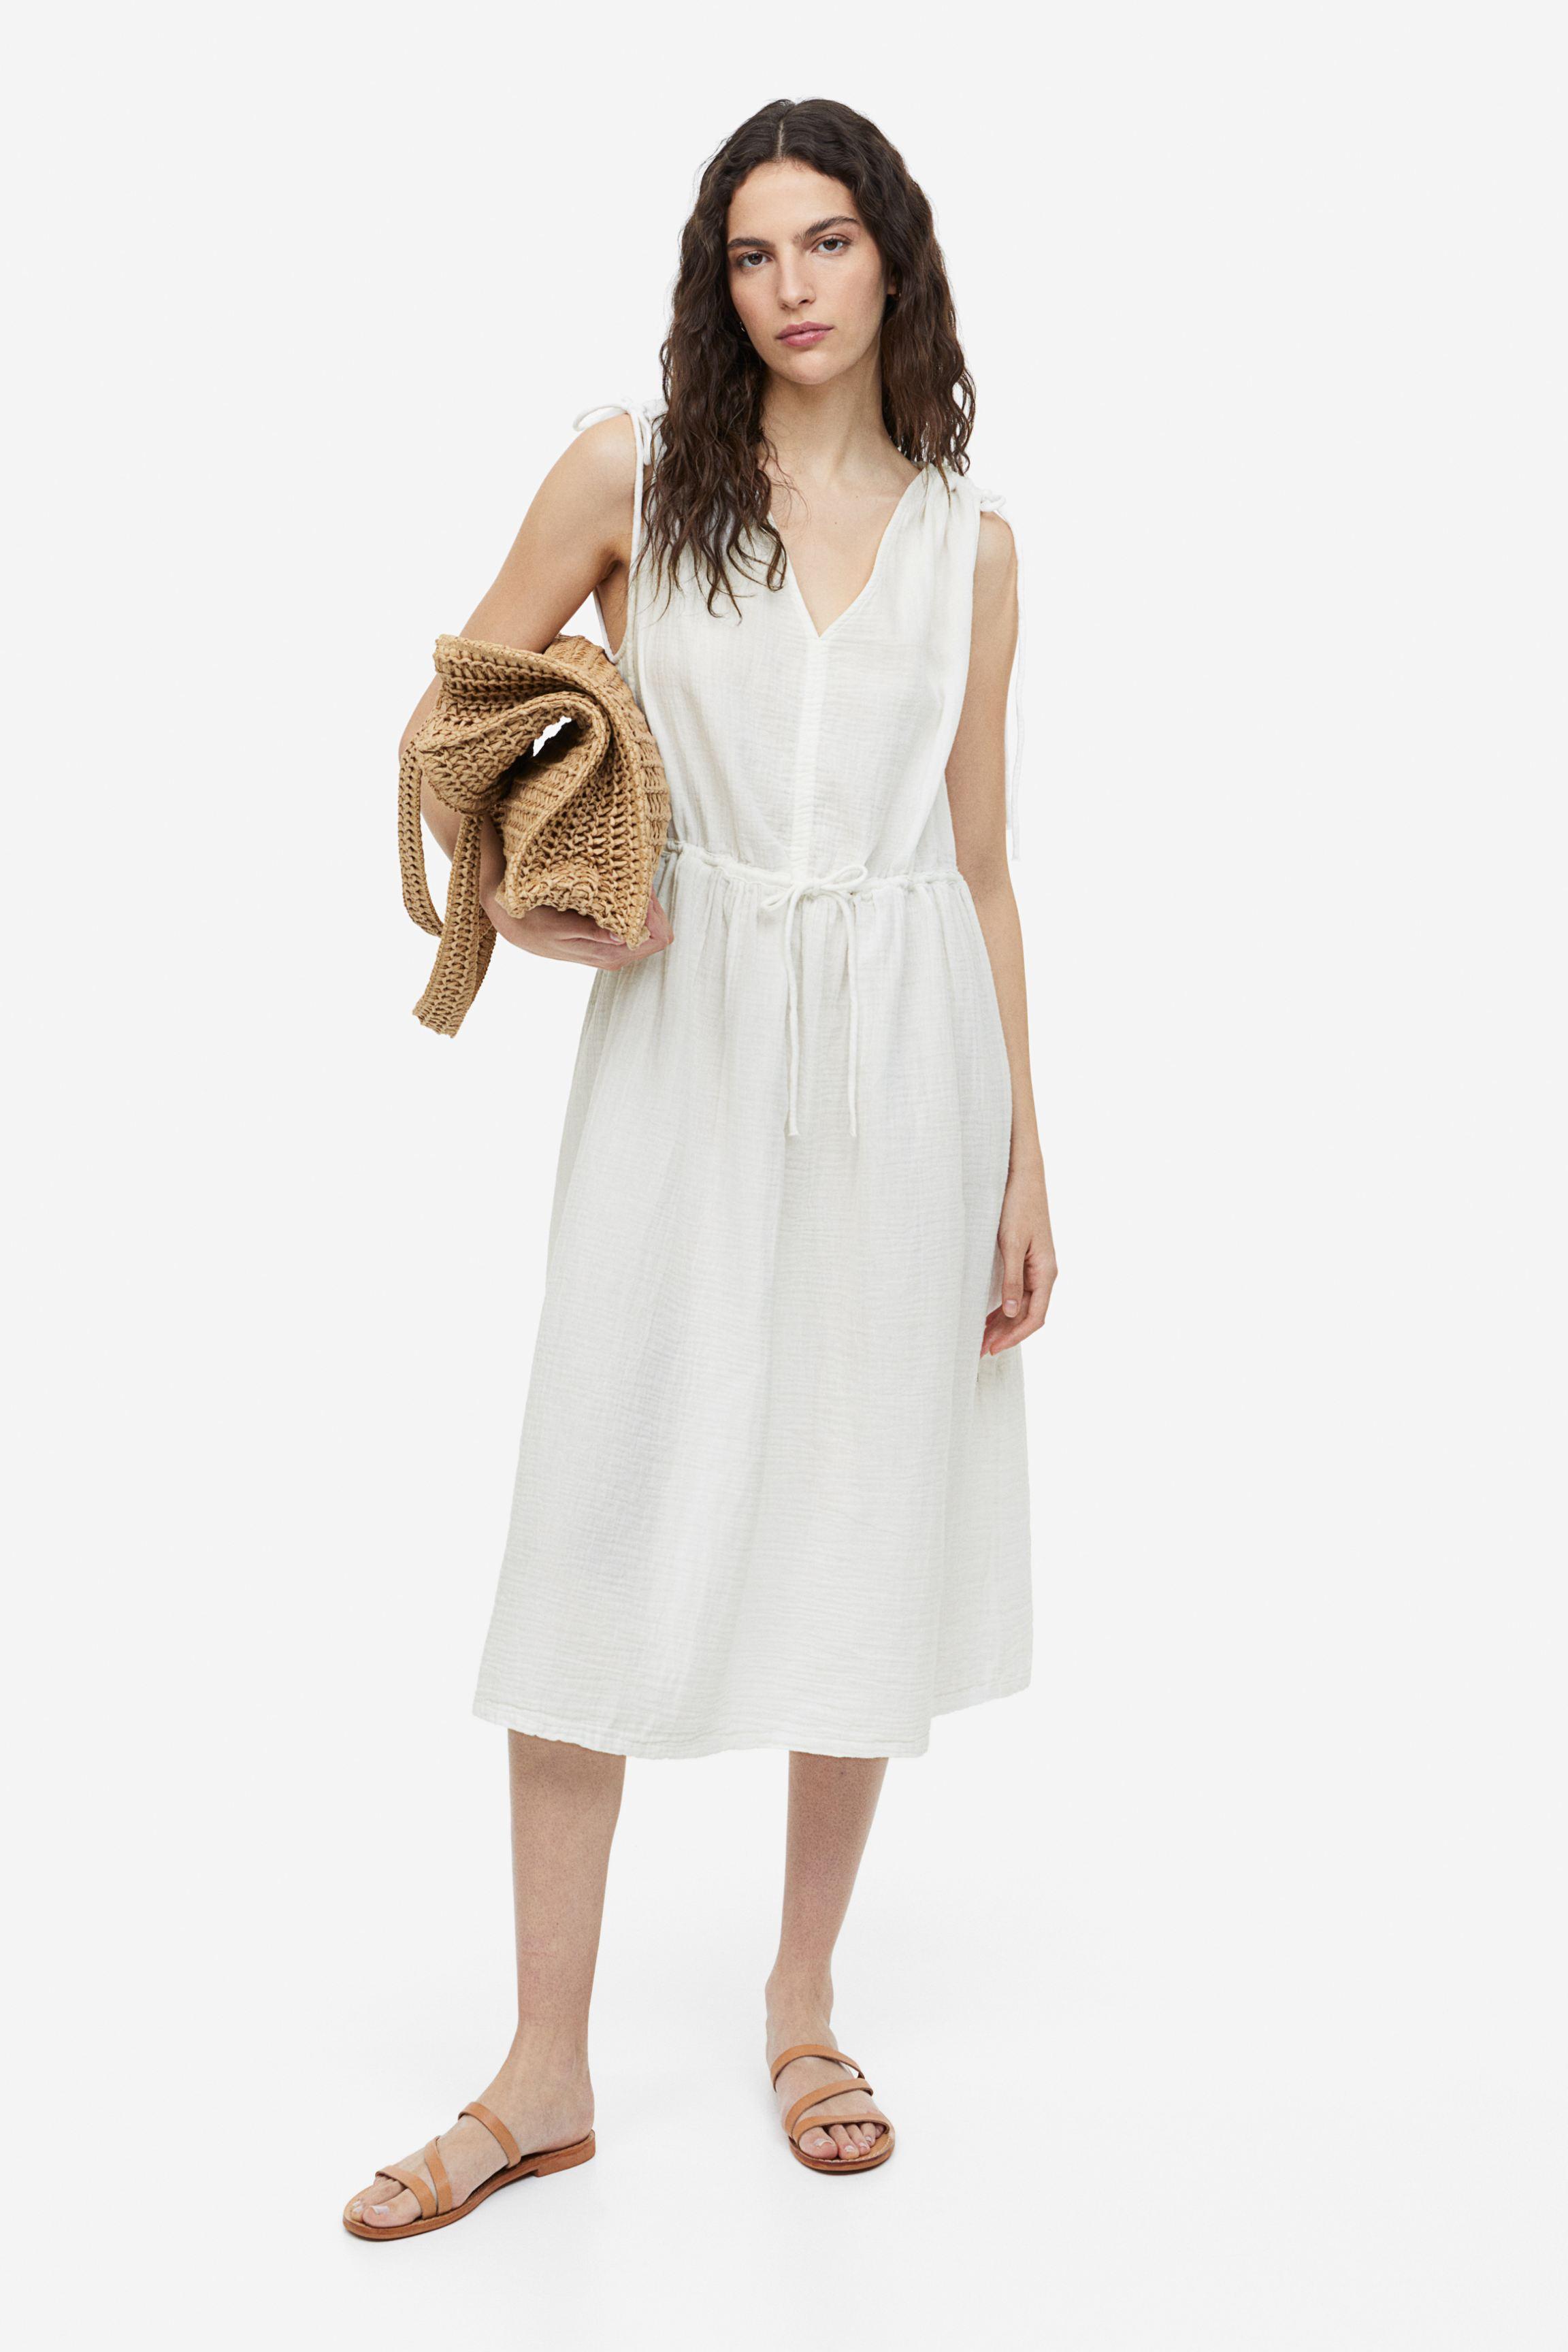 H&M Dress in White | Lyst